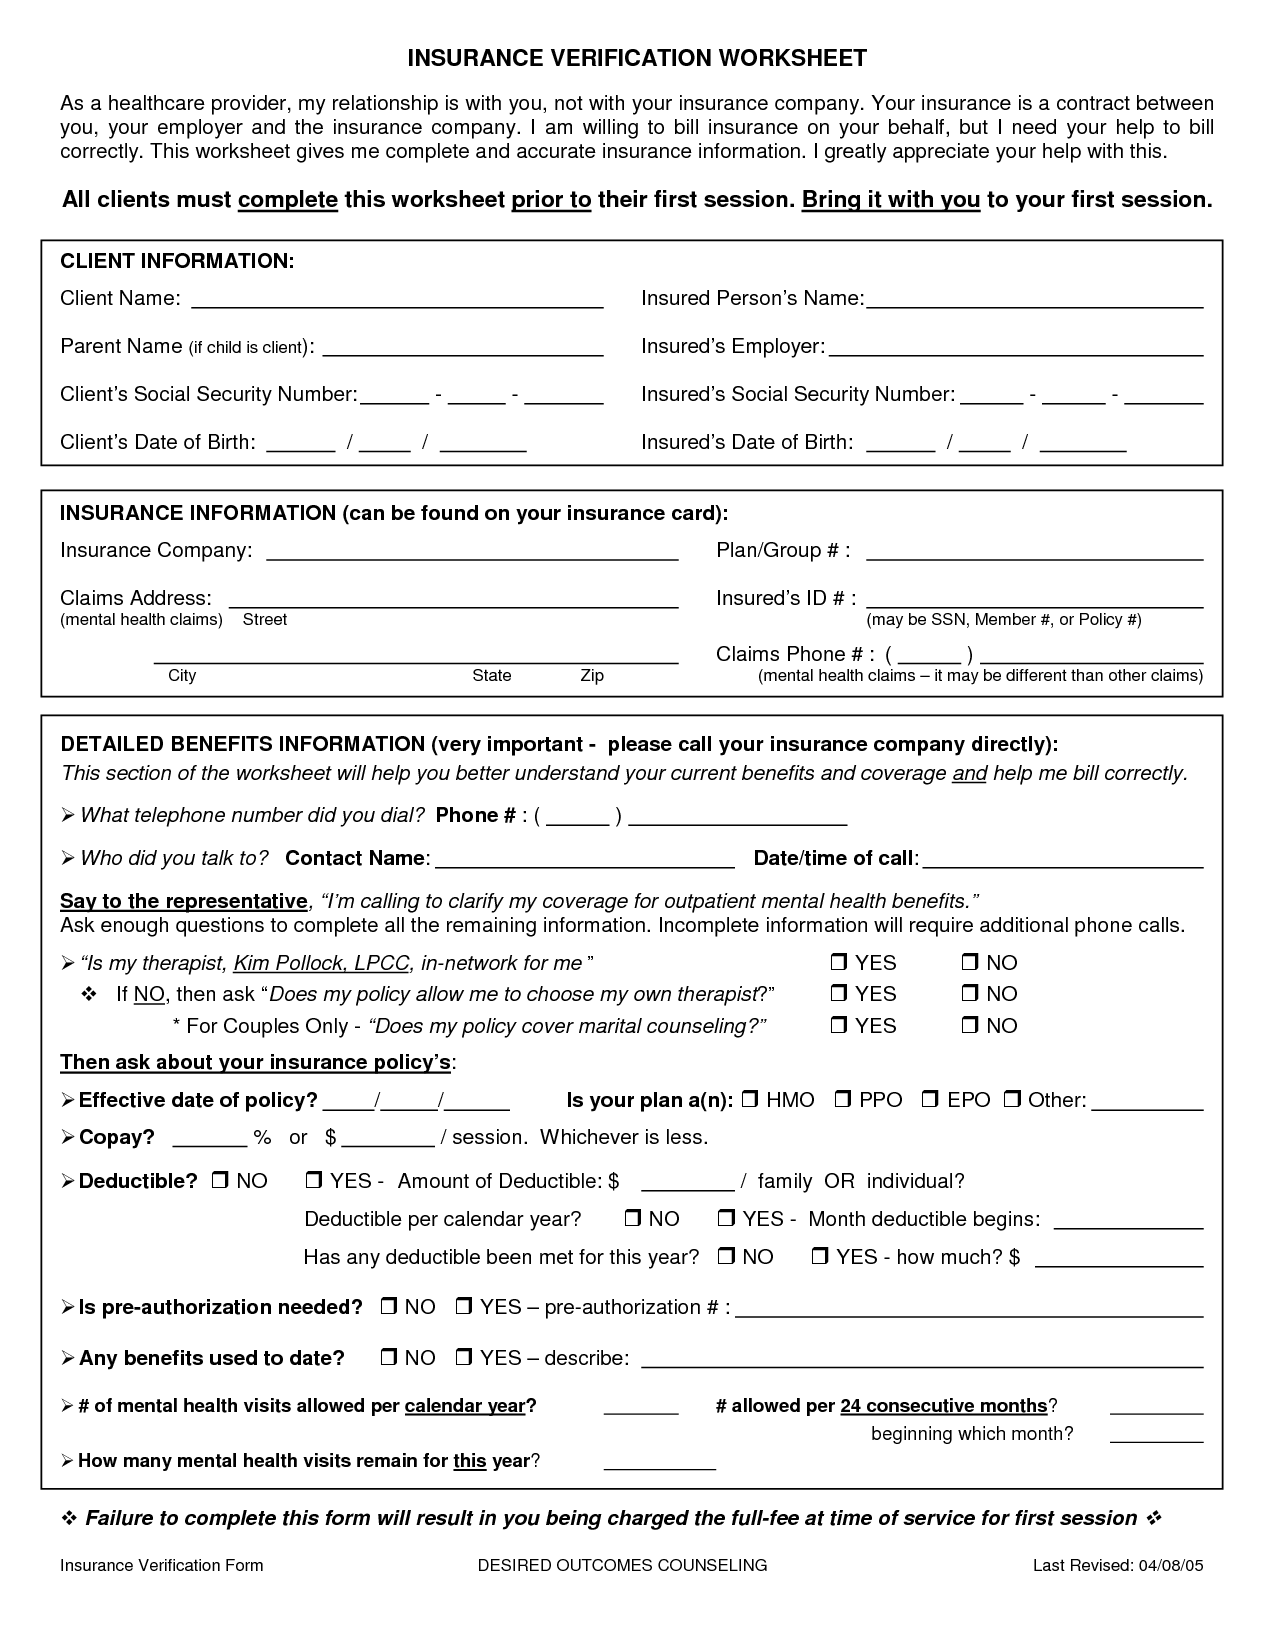 Health Insurance Verification Form Image